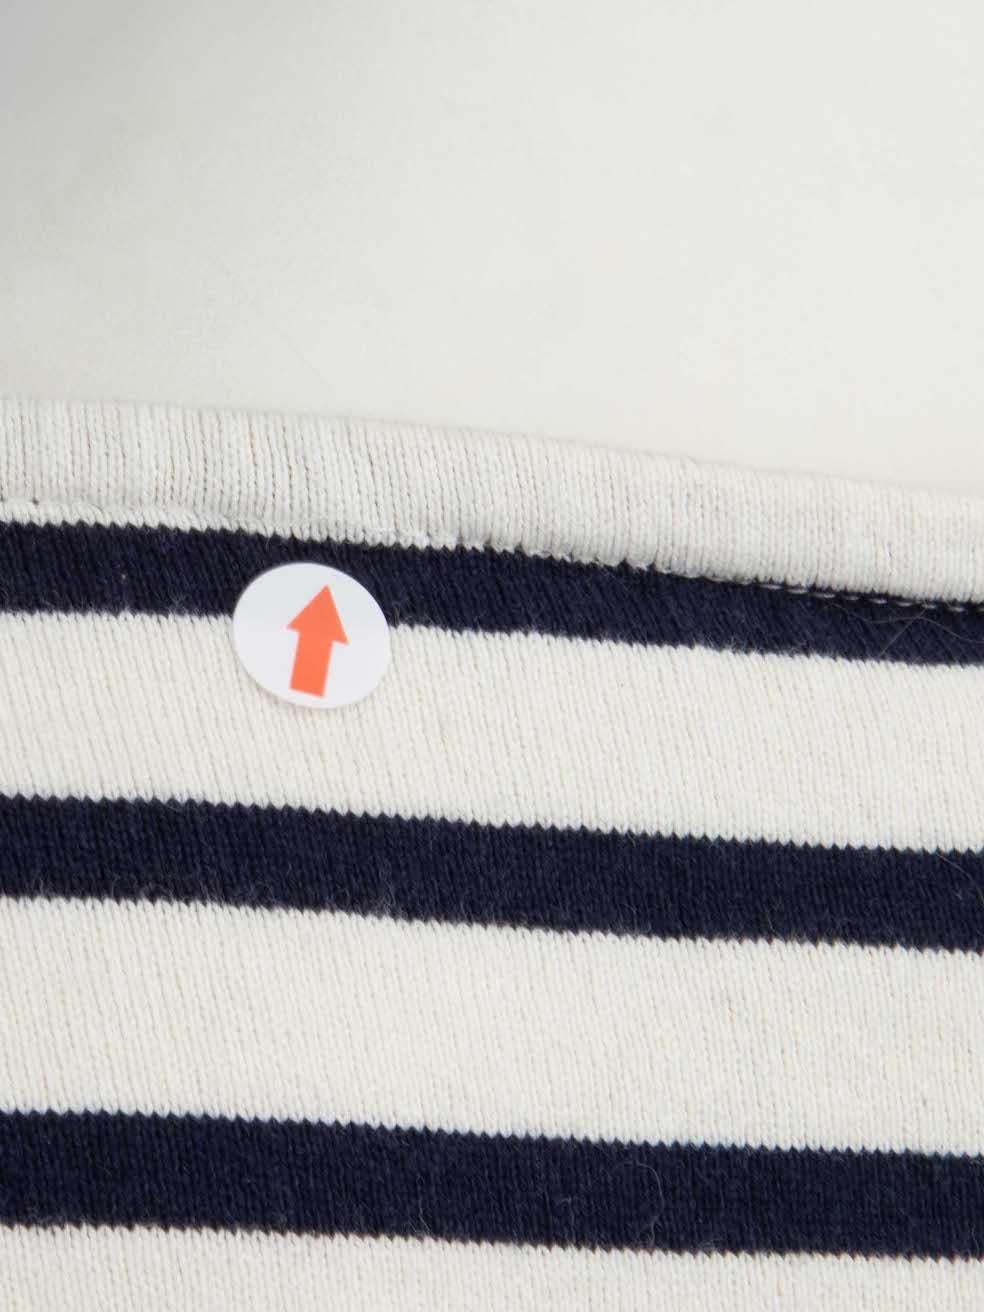 Women's Saint Laurent Striped Long Sleeves Top Size L For Sale